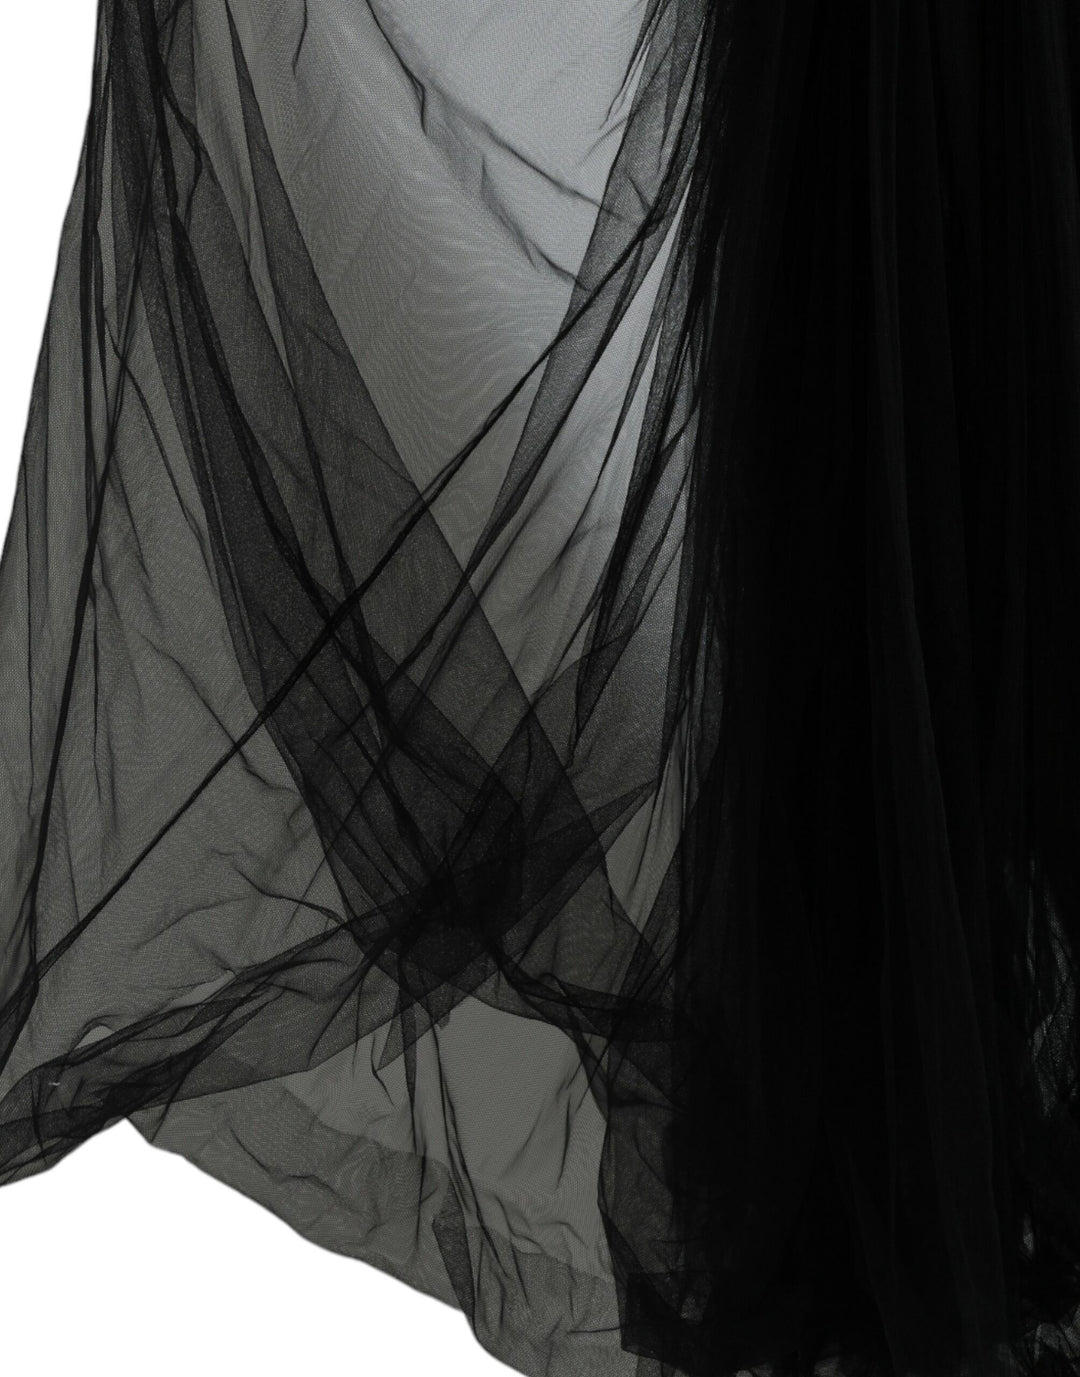 Dolce & Gabbana Elegant Black Sequined Evening Dress